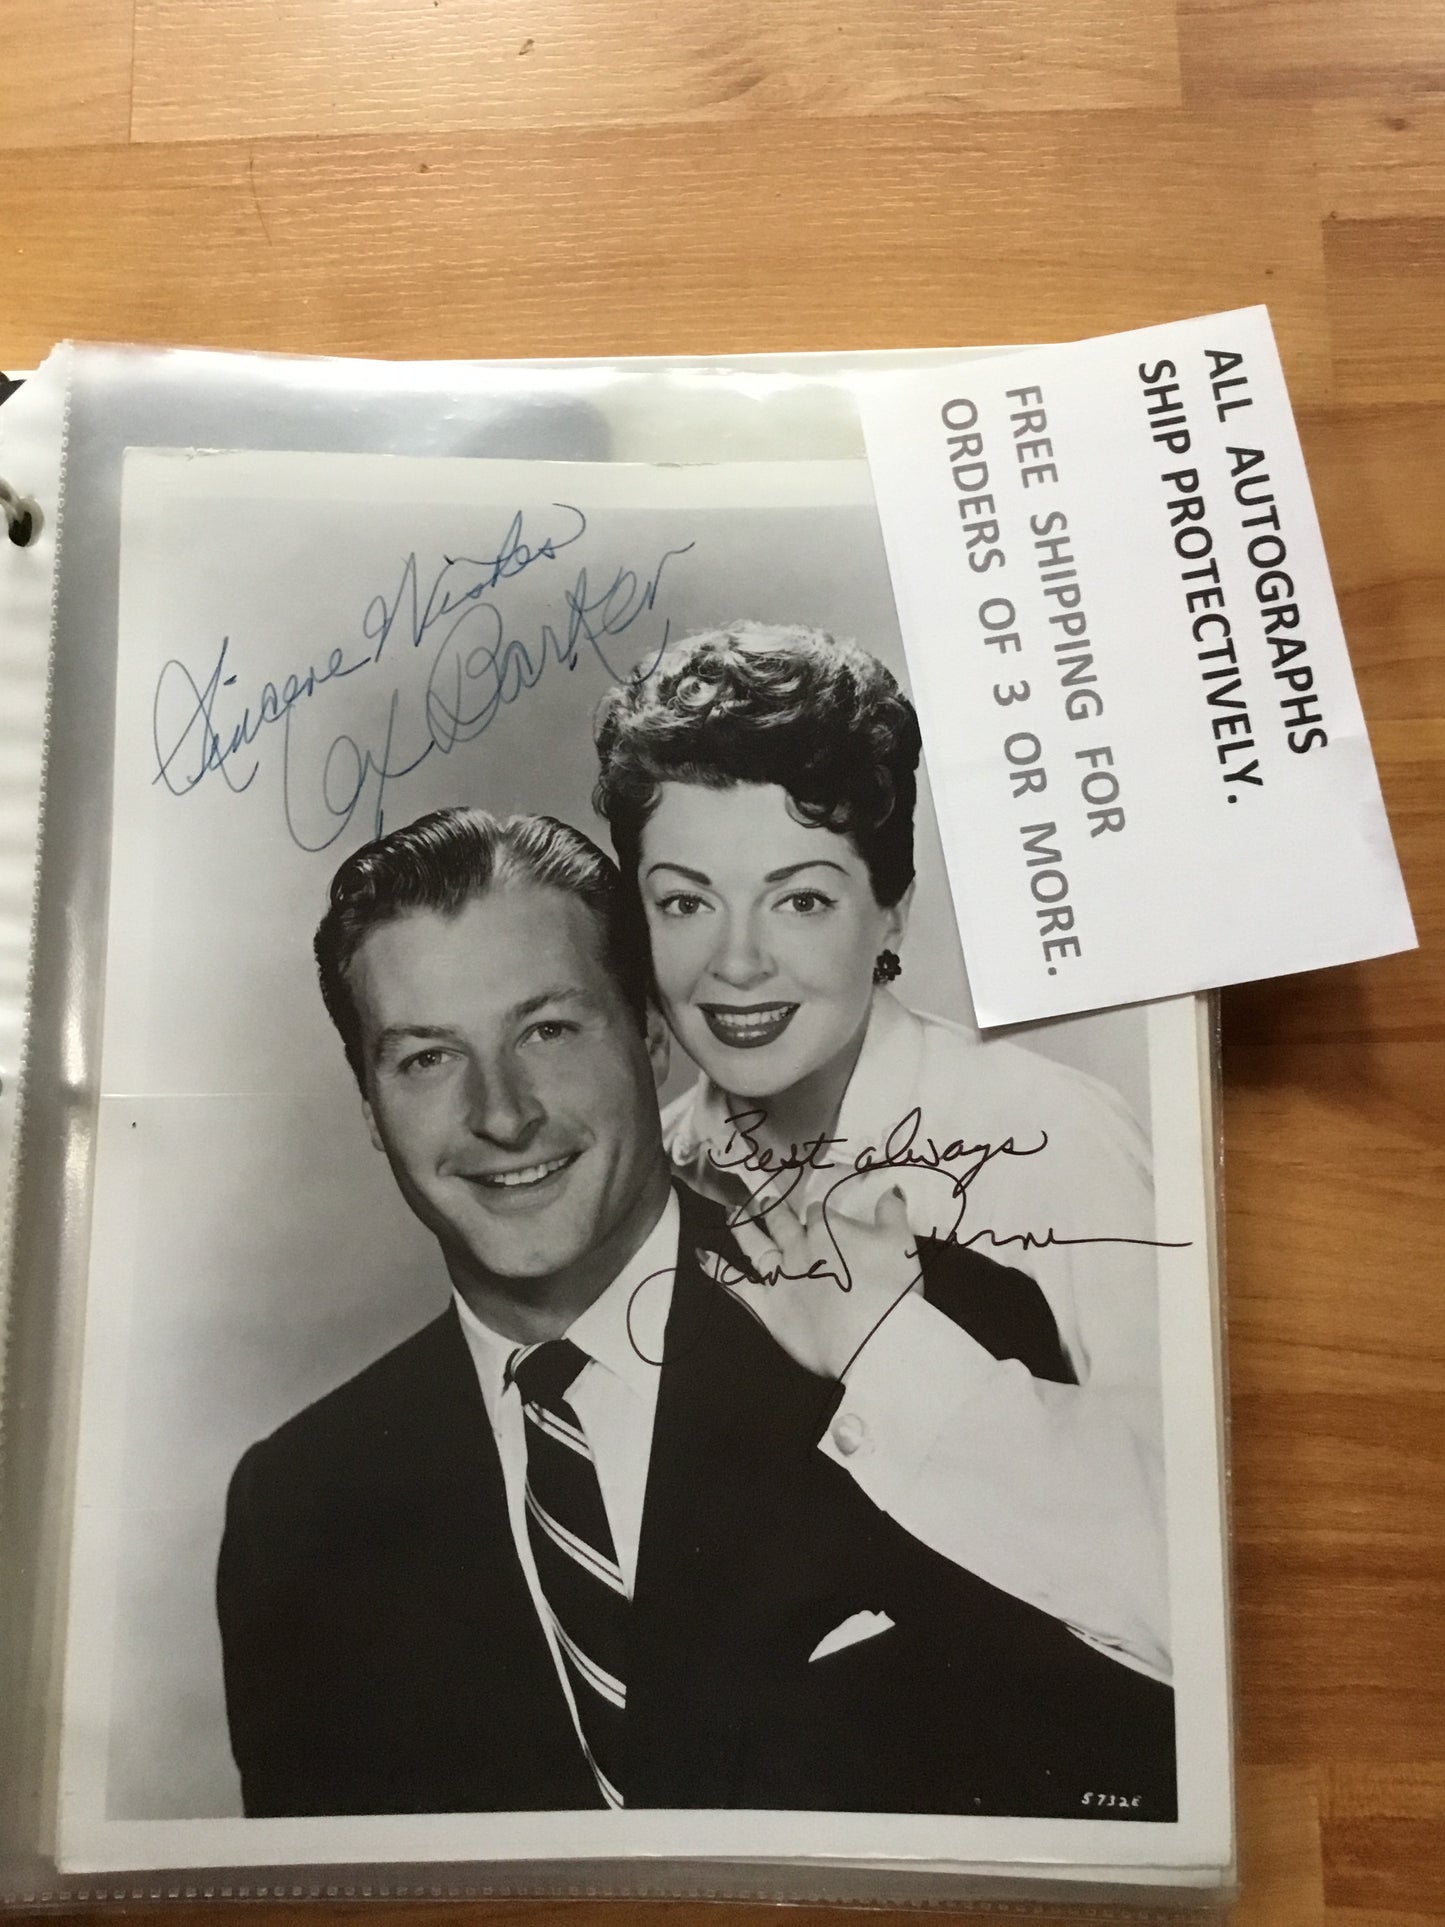 Lana Turner and Lex Barker autographs